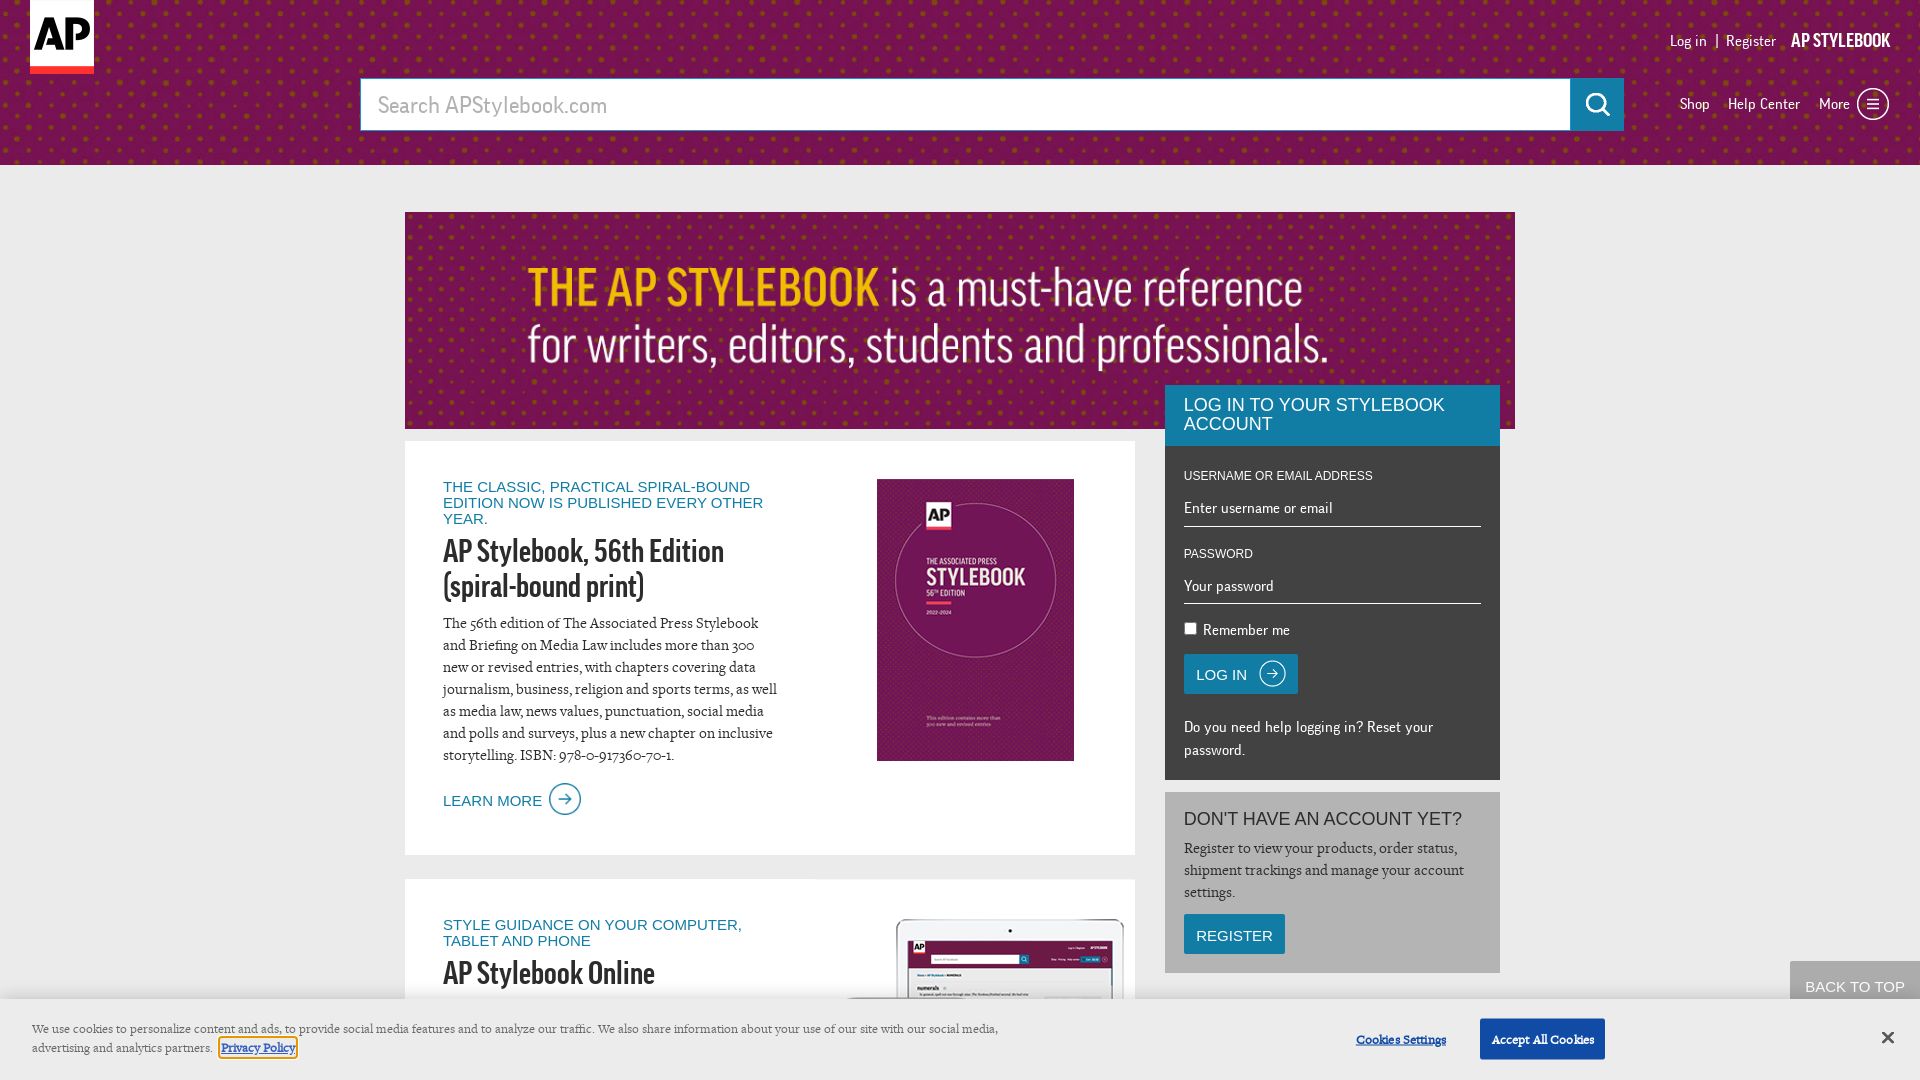 Website status apstylebook.com is   ONLINE